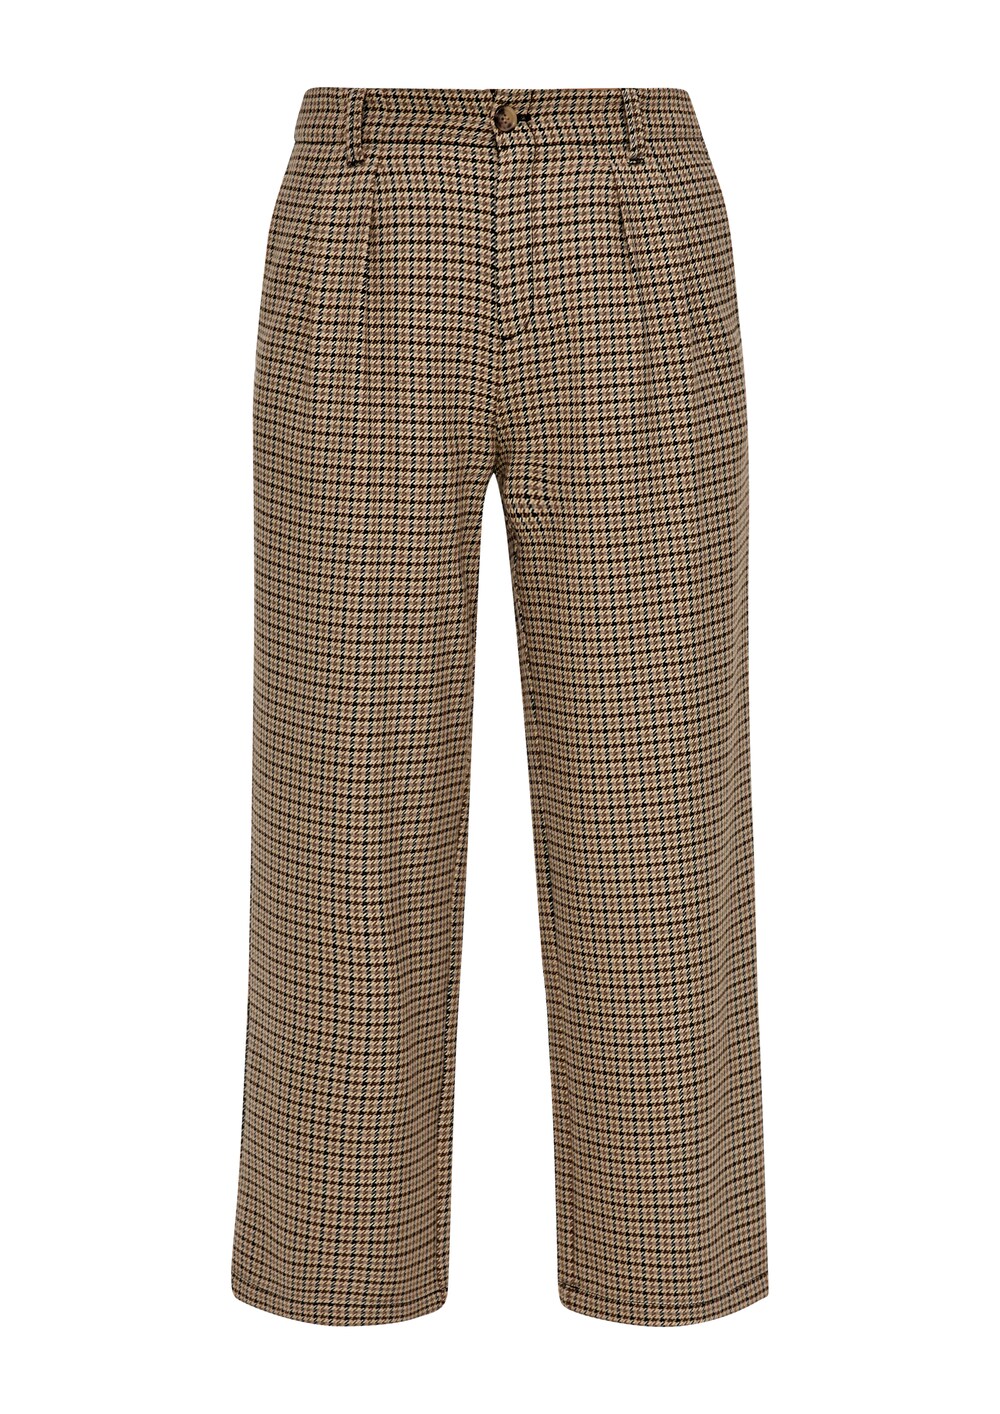 Широкие брюки со складками спереди S.Oliver, бежевый широкие брюки со складками misspap бежевый